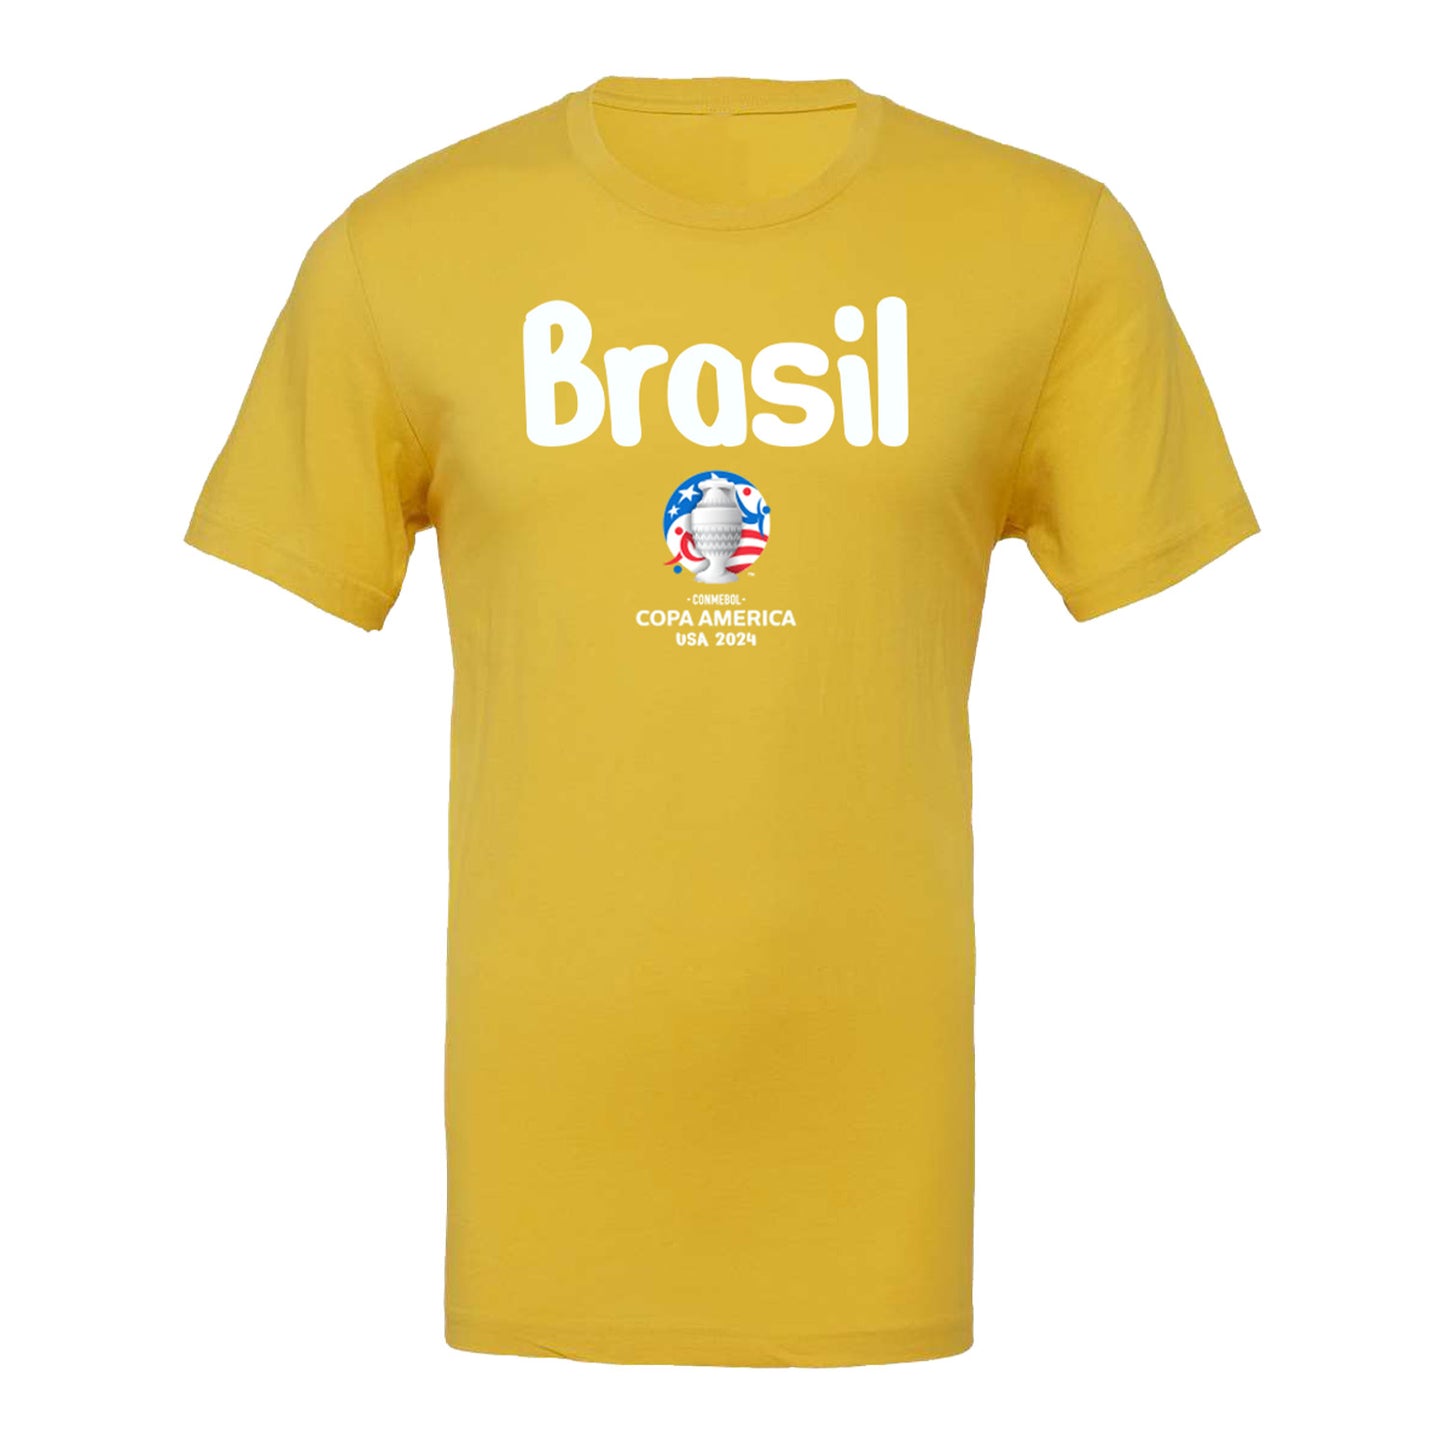 Copa America Brasil Yellow T-Shirt - Front View